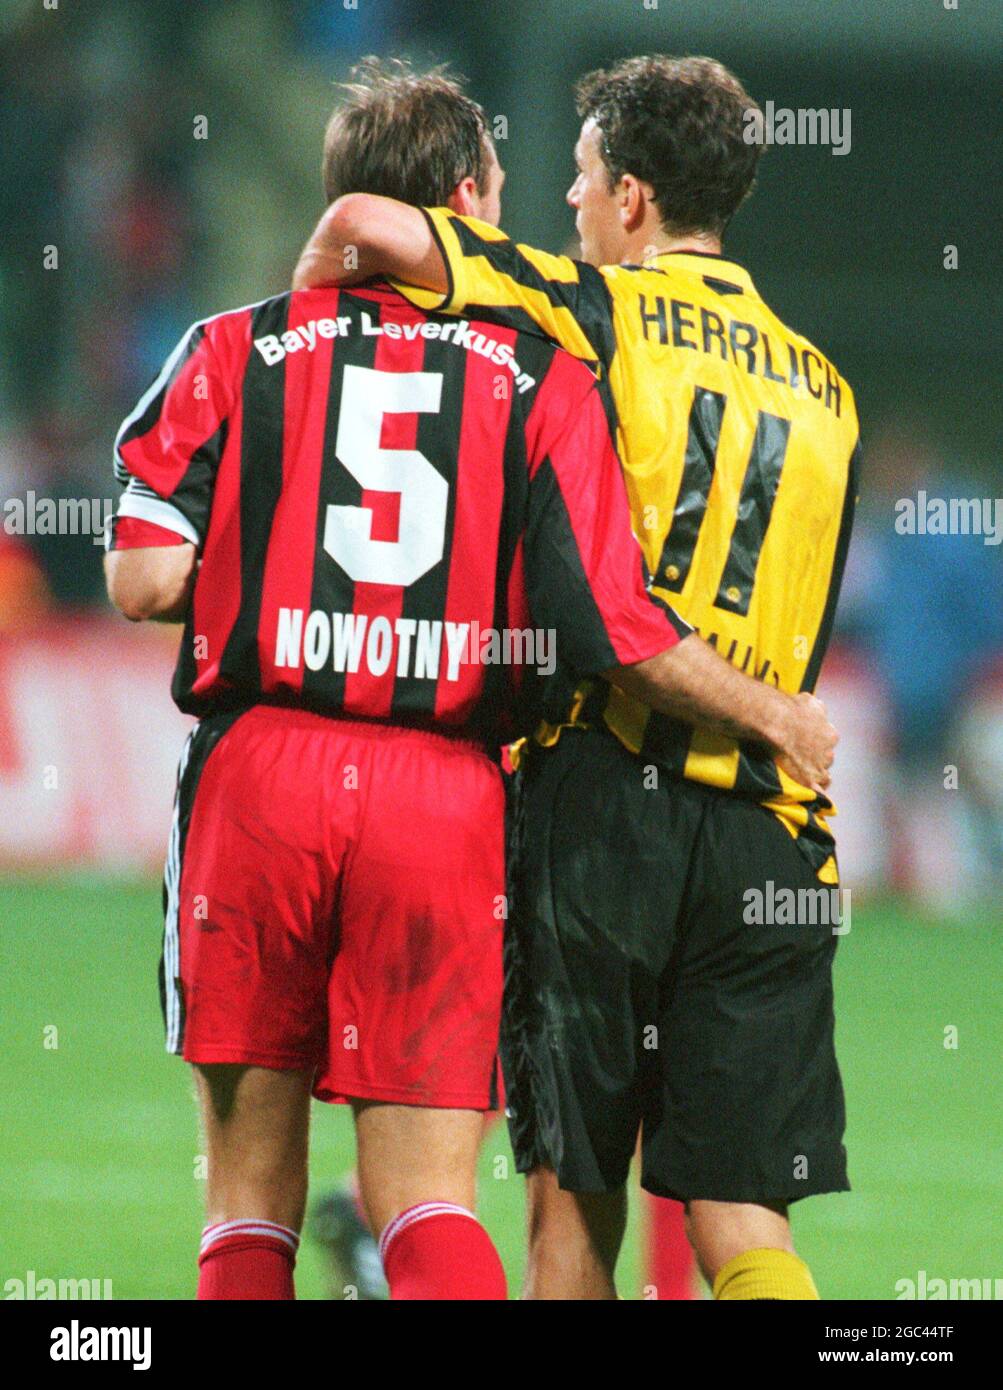 Leverkusen Germany 24.2.2002, Football: Bundesliga season 2001/02, Bayer 04 Leverkusen (B04, red) vs Borussia Dortmund (BVB, yellow) 4:0 -- Jens NOWOTNY (B04), Heiko HERRLICH (BVB) Stock Photo